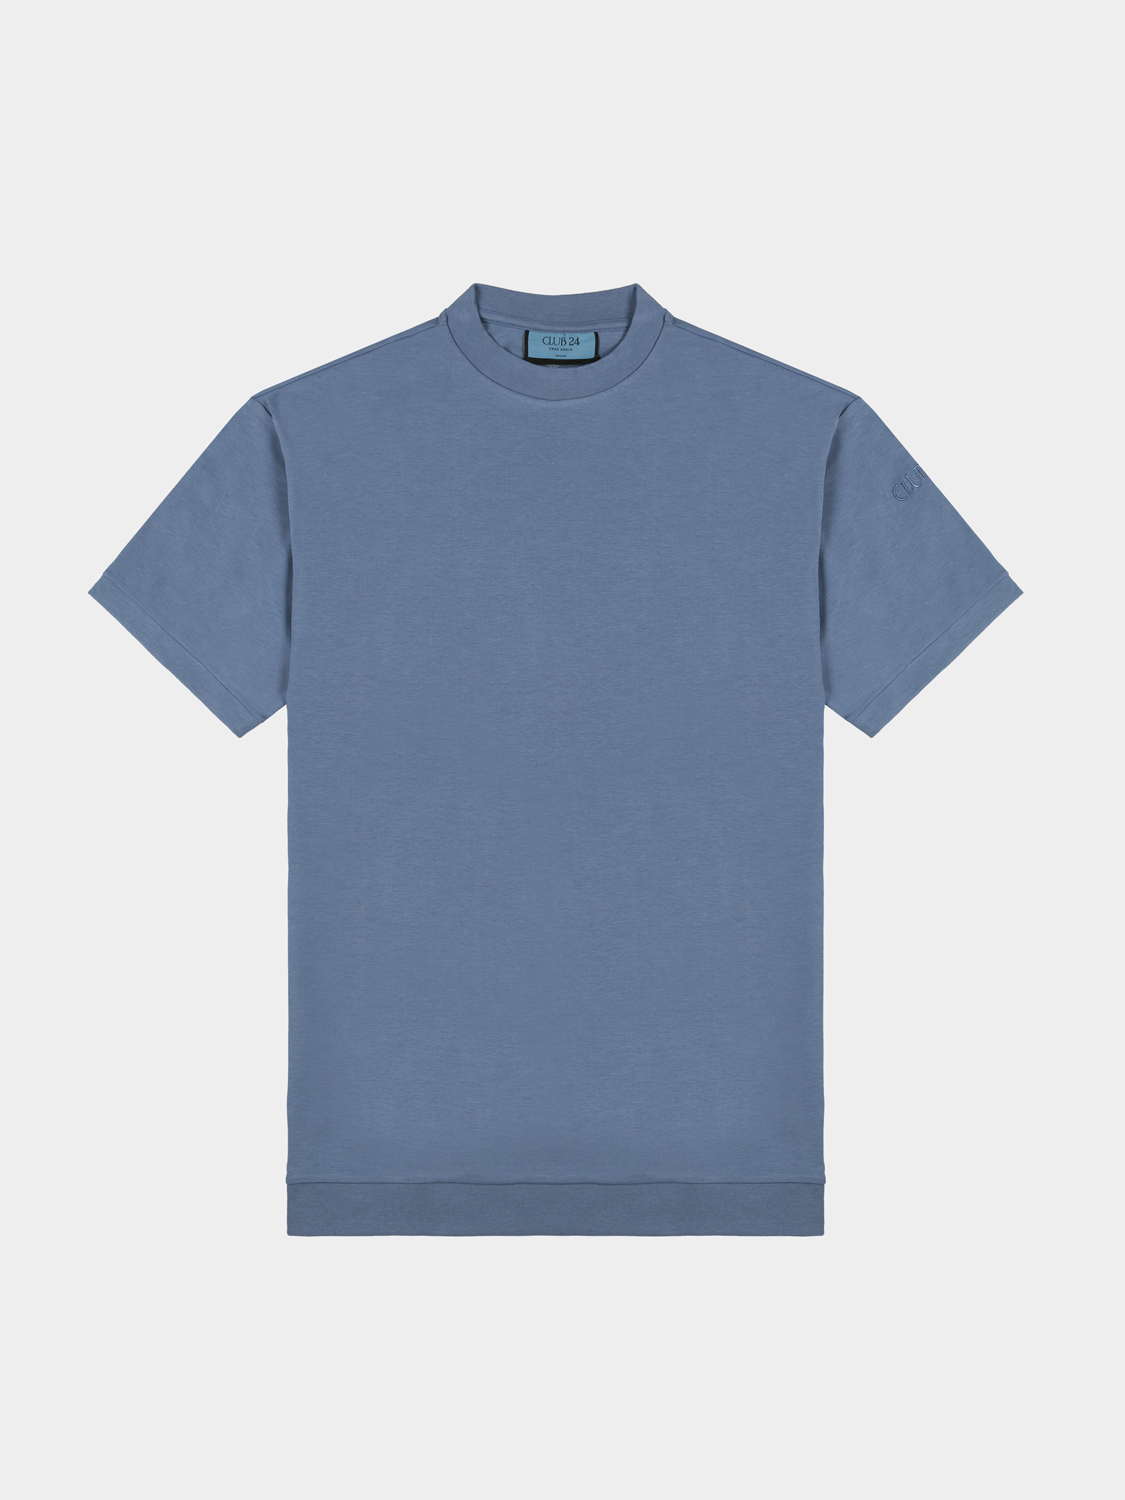 Freedom Fit T-Shirt - Blue Heaven [NEW]